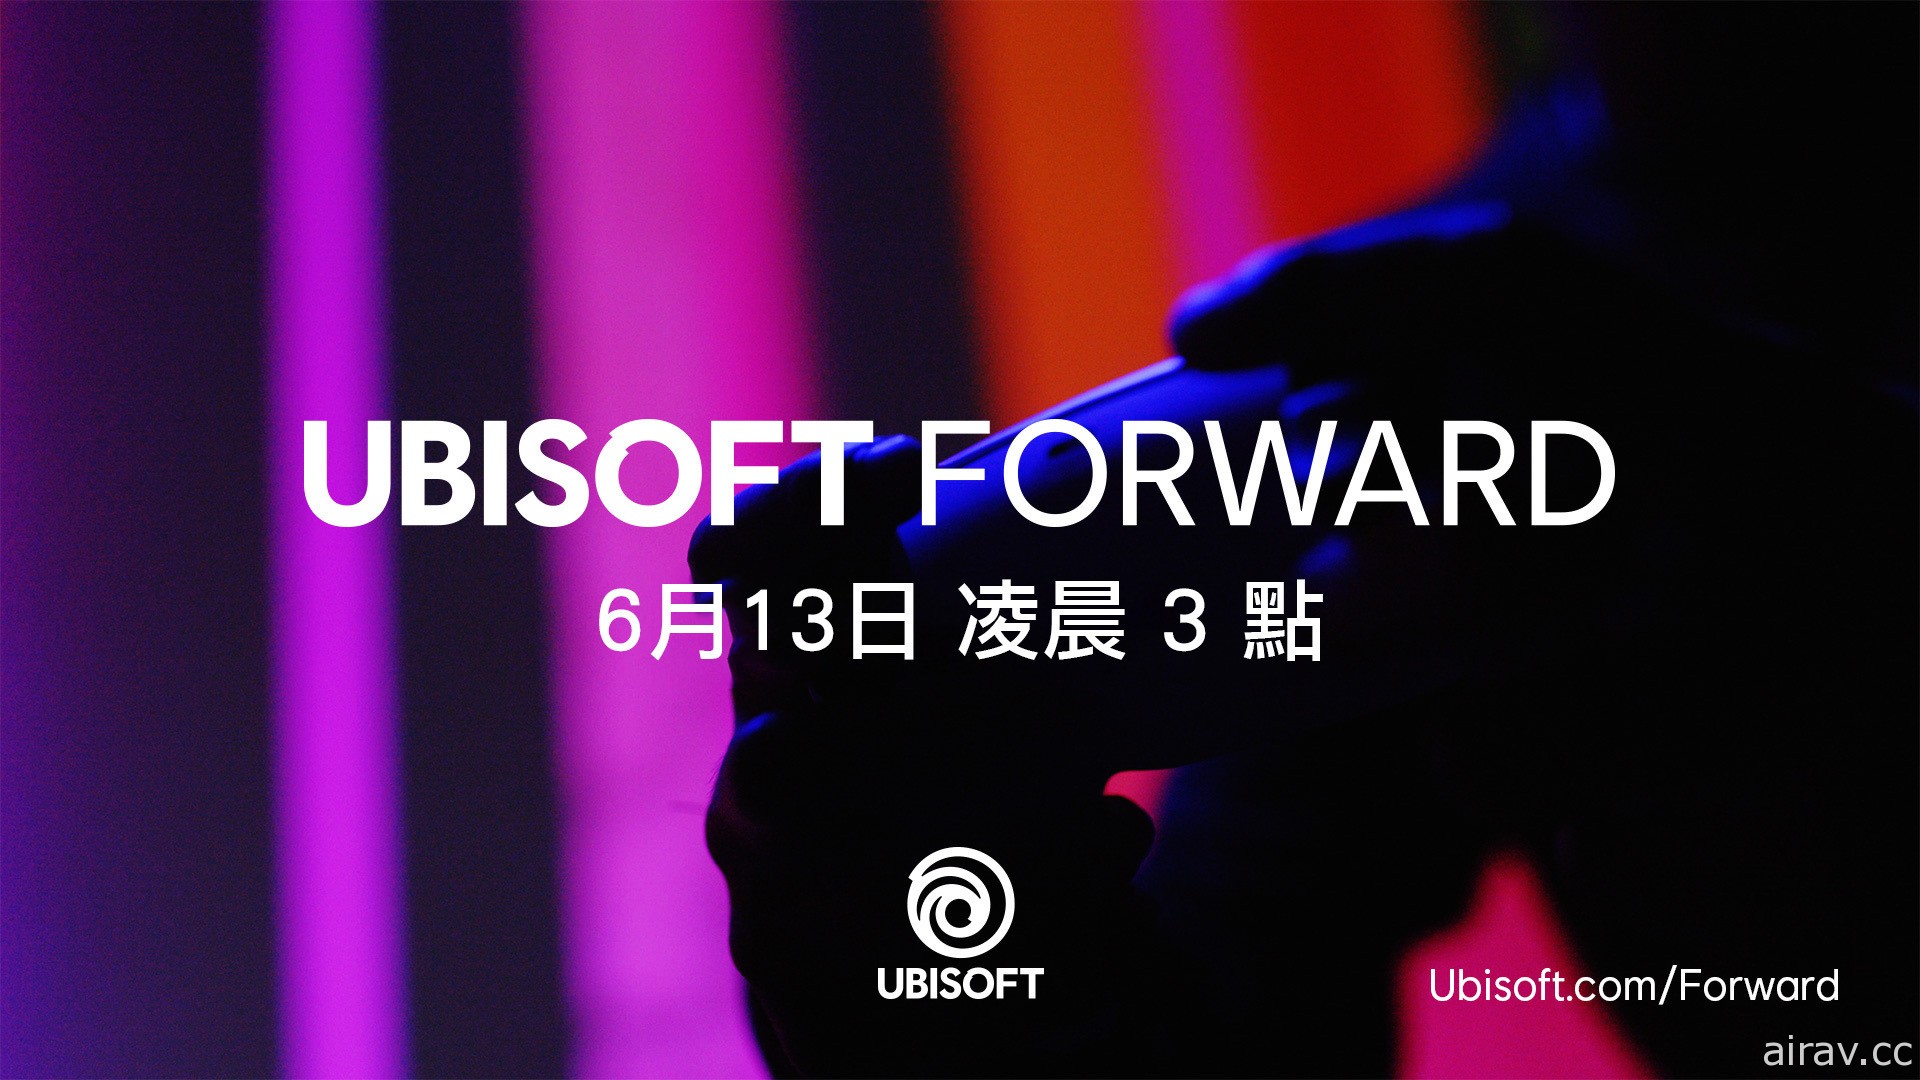 【E3 21】Ubisoft 揭露 6 月 13 日 Ubisoft Forward 发表会资讯